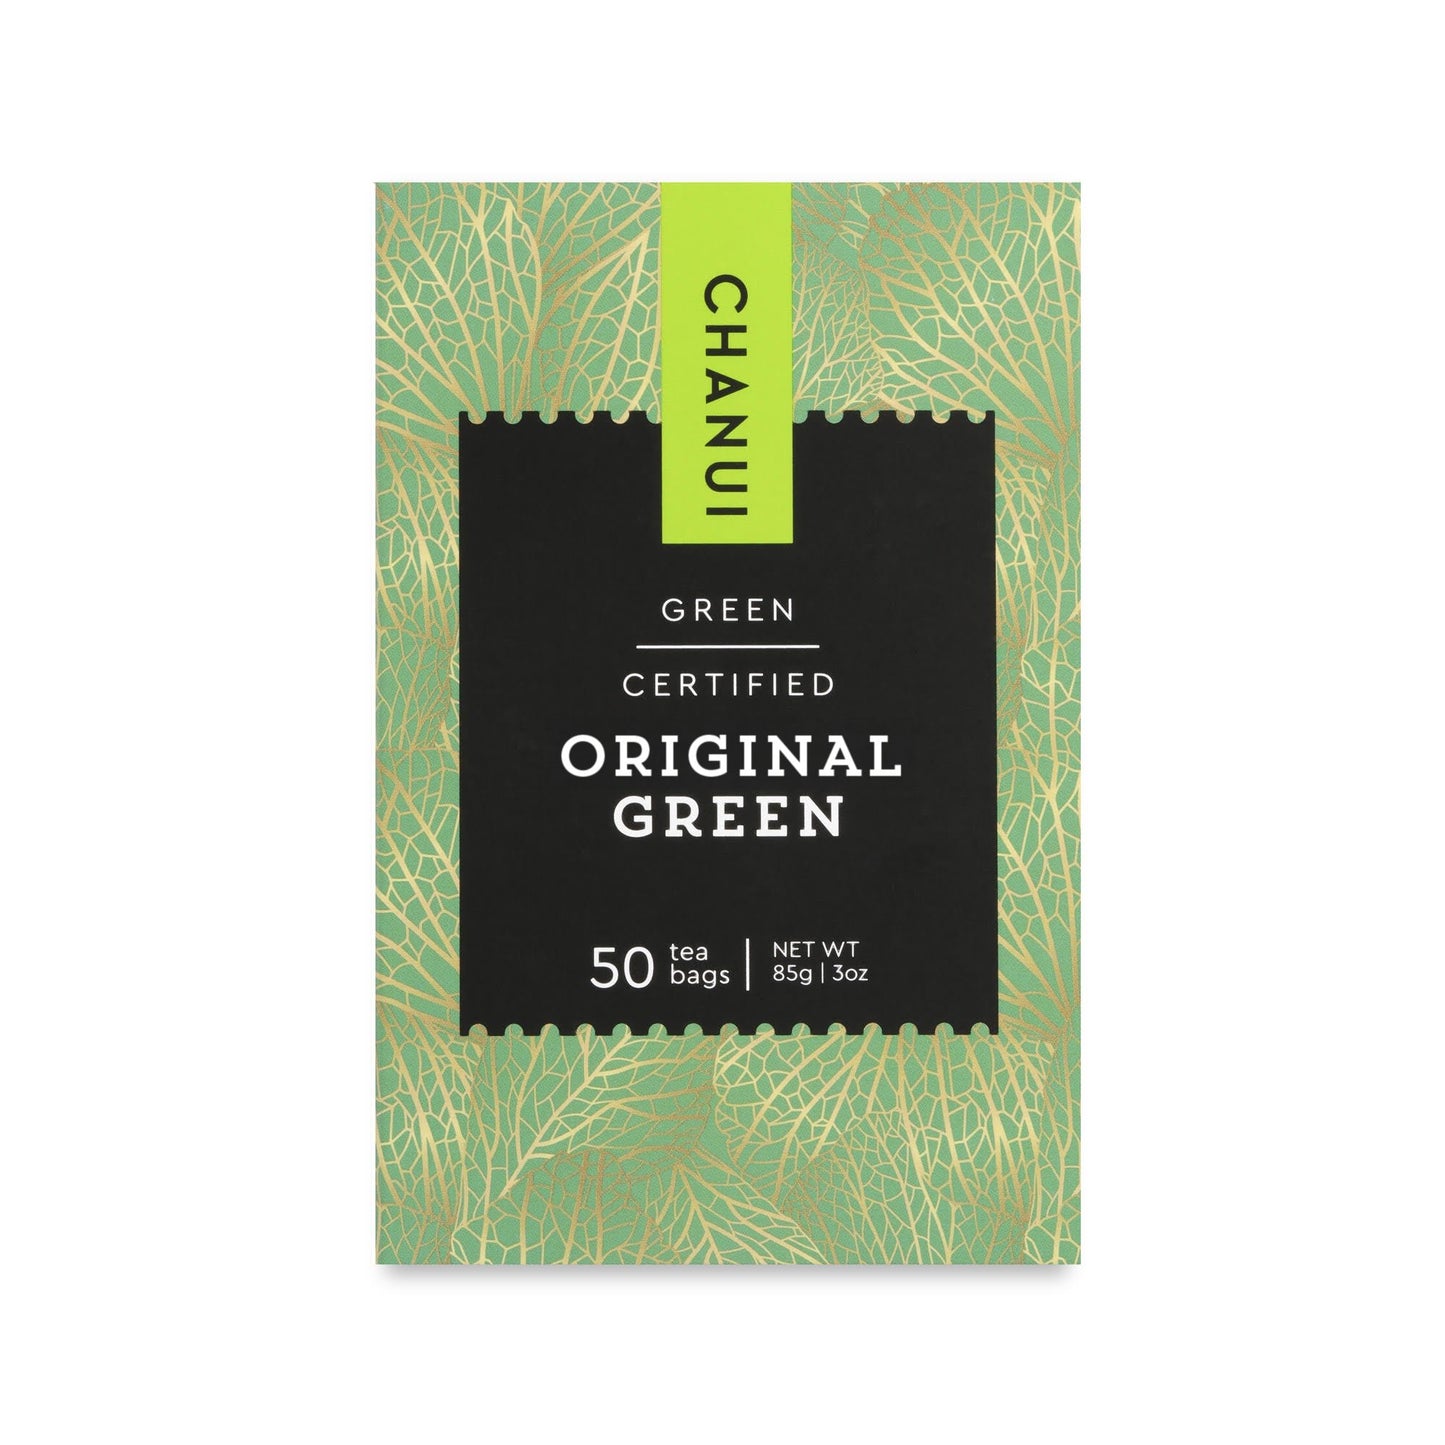 Green and Black box of Chanui Original Green 50 Teabags